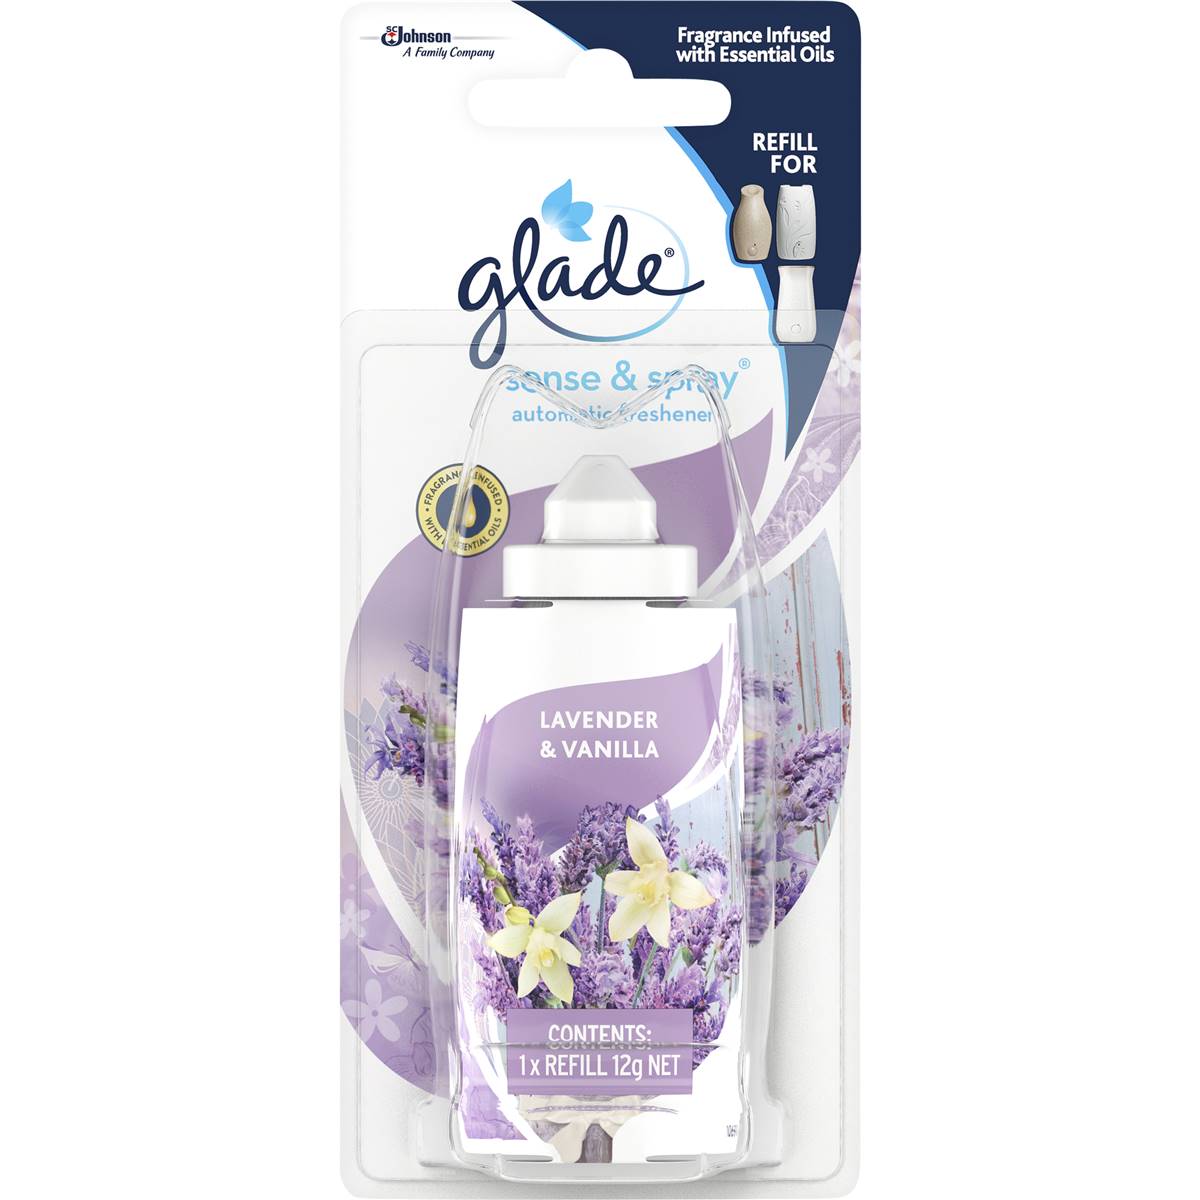 Glade Sense & Spray Automatic Spray Air Freshener Lavender Refill